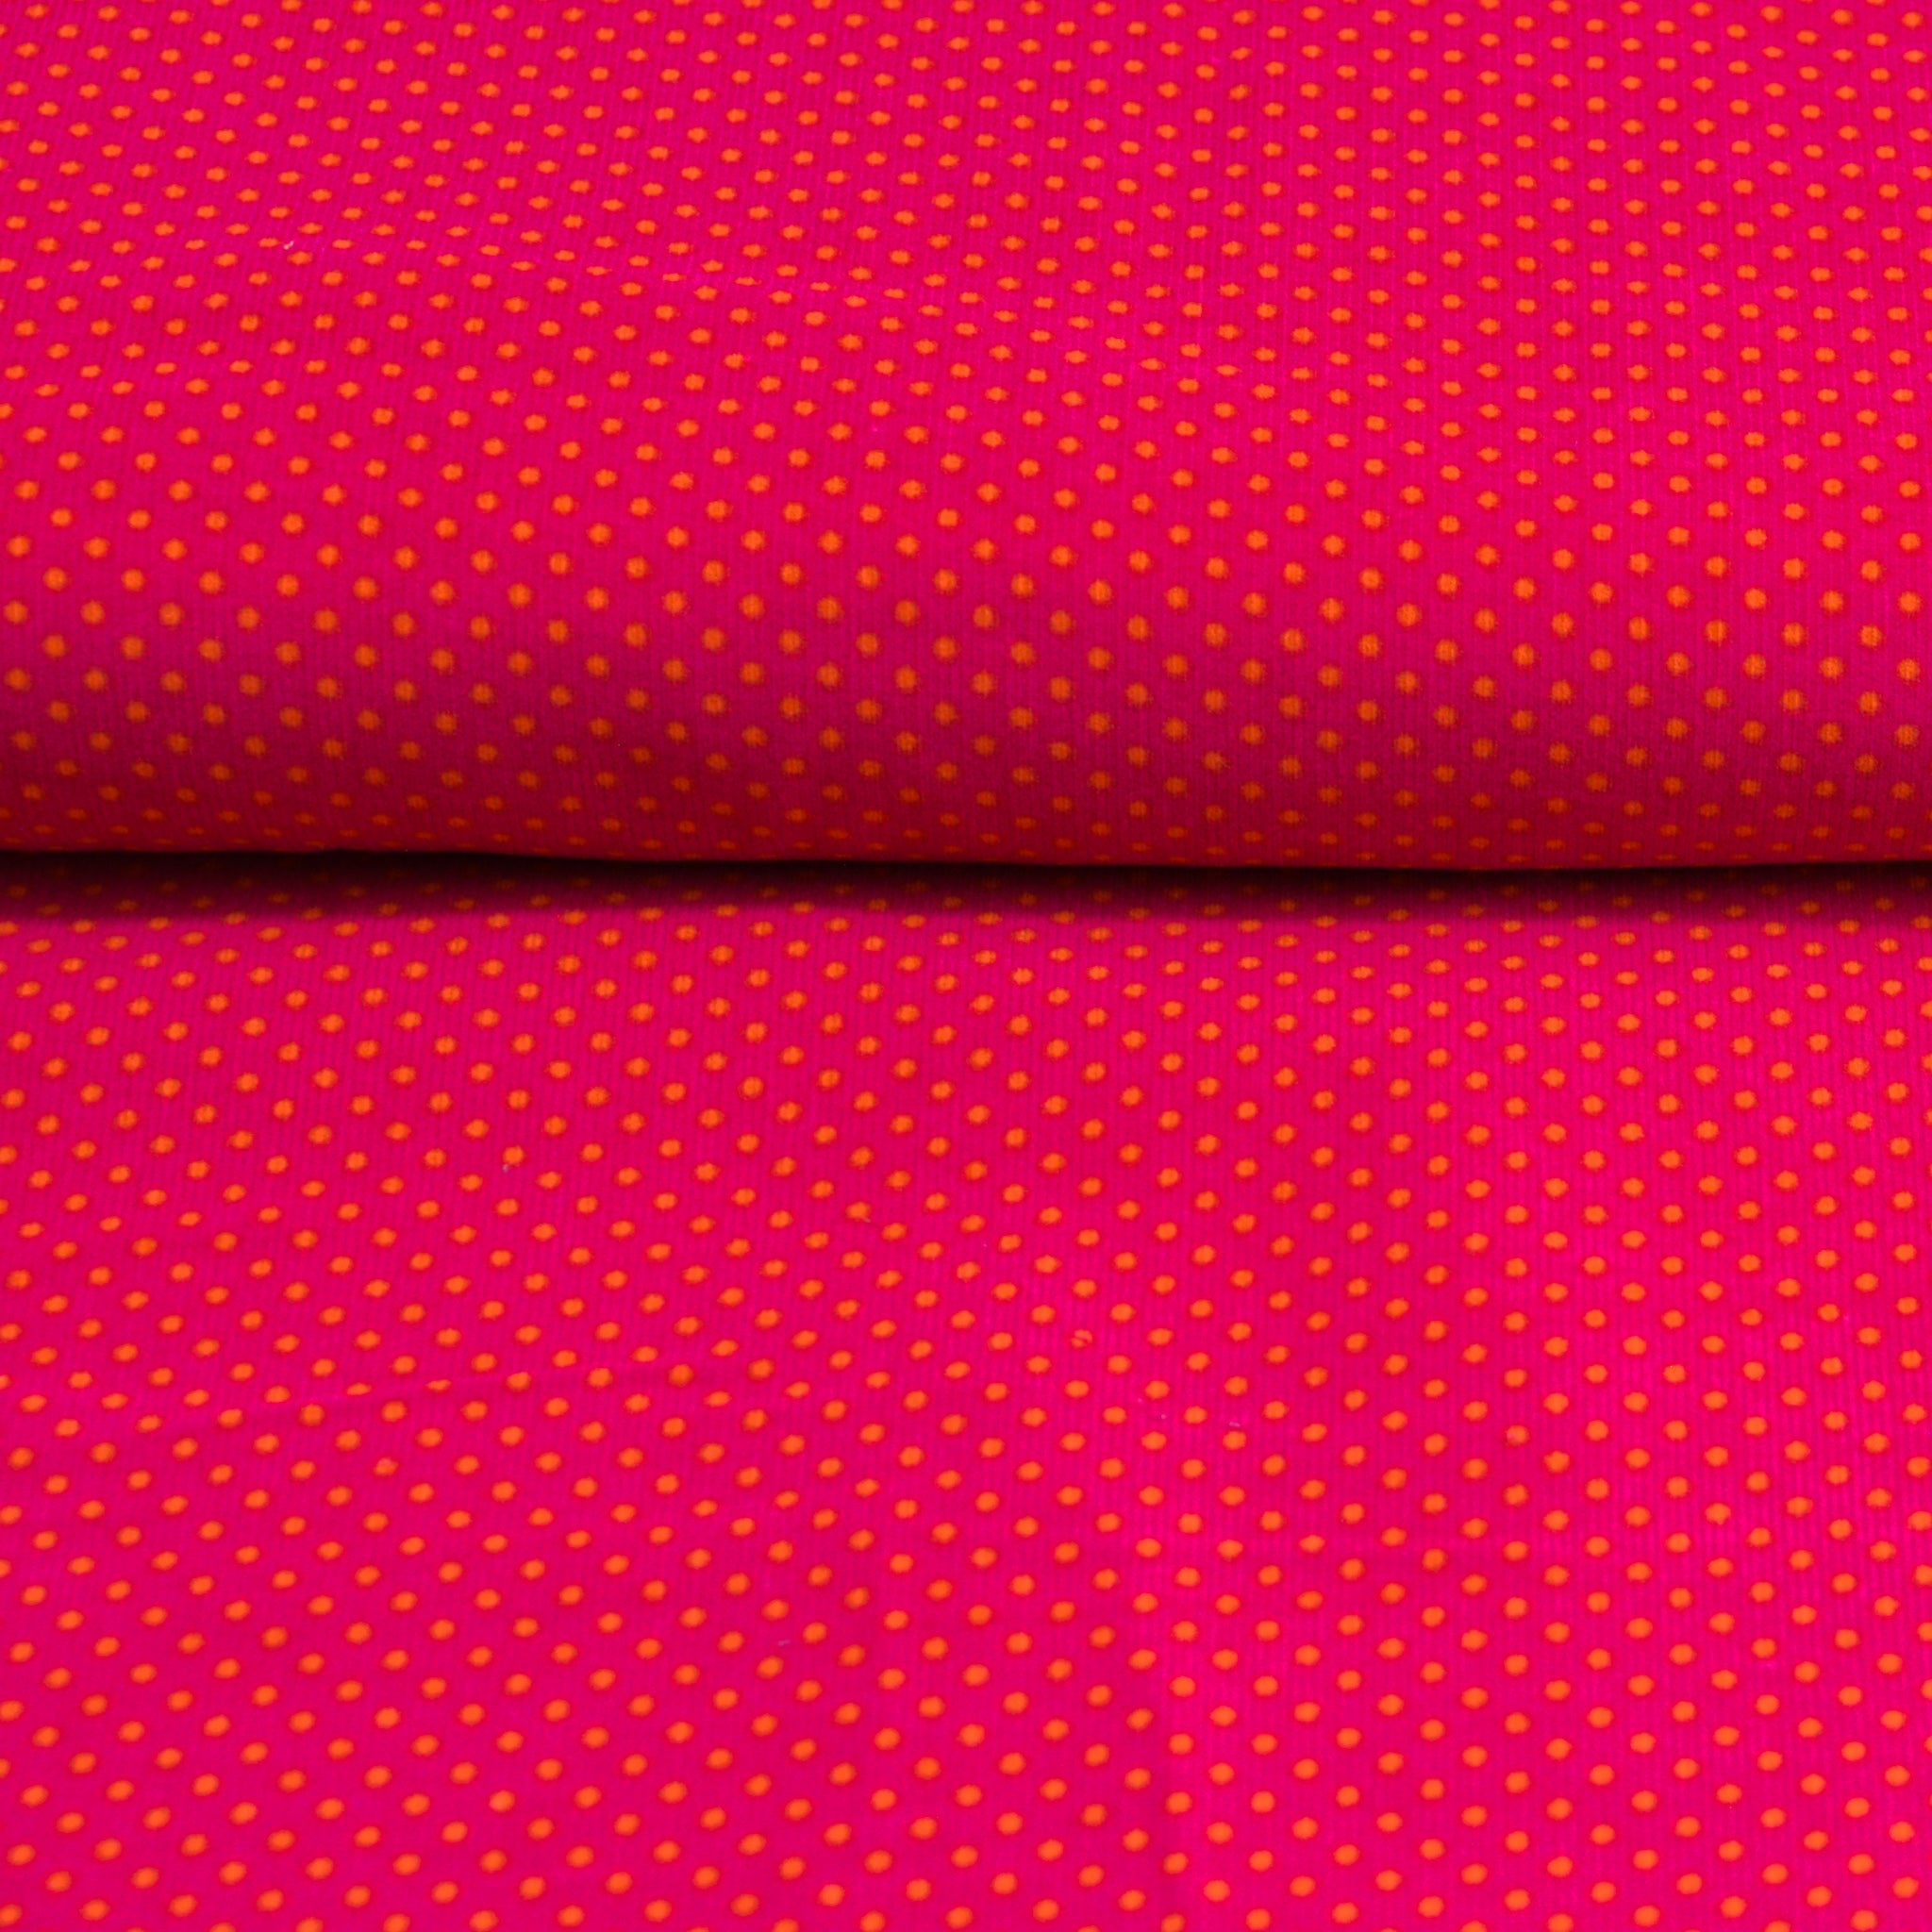 Cord - pink mit Punkten / Dots Fabric poshpinks